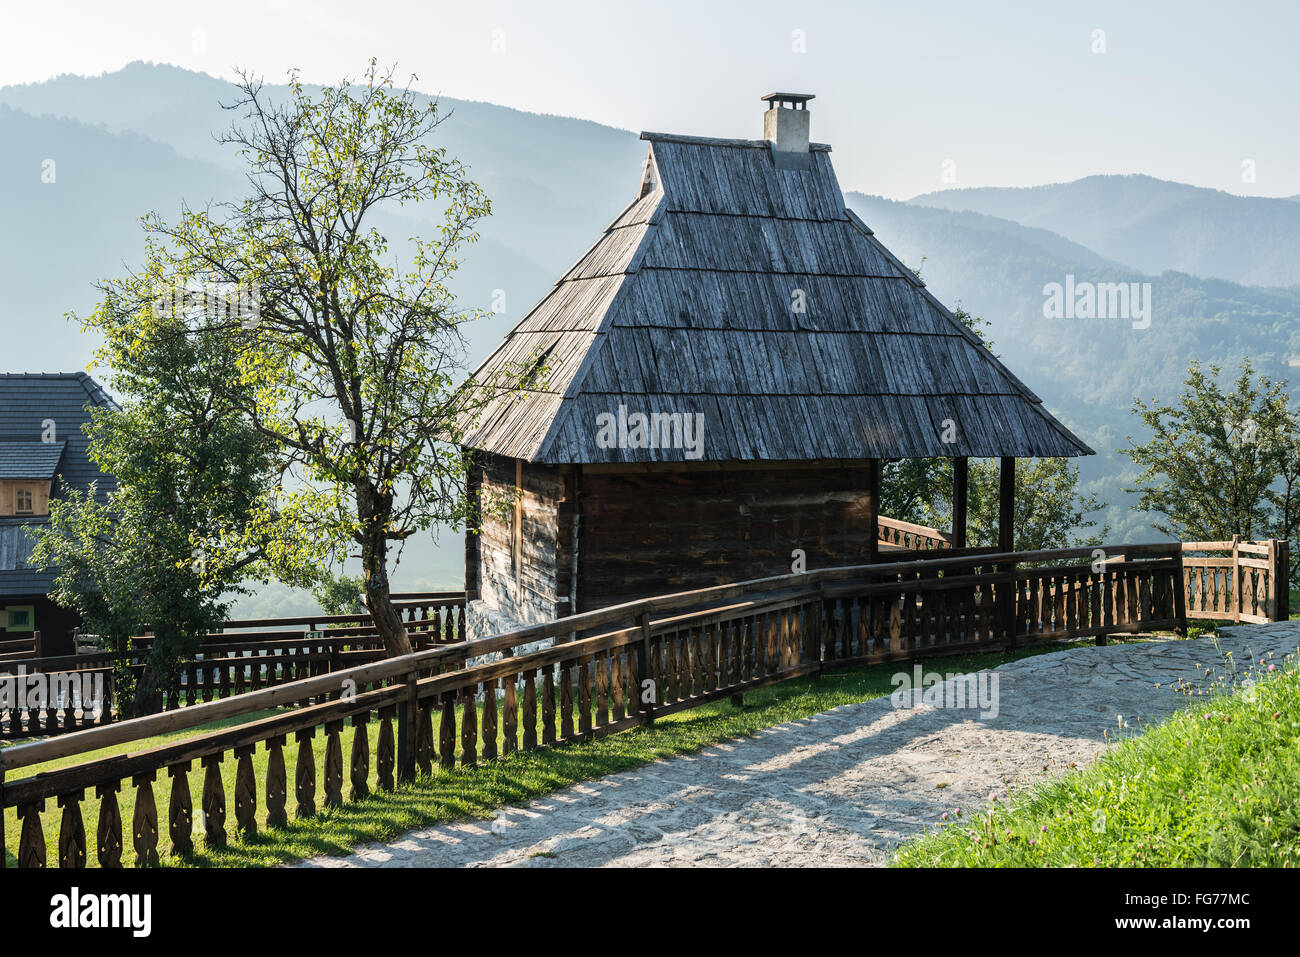 Wooden house in Drvengrad village also called Kustendorf  in Zlatibor District, Serbia Stock Photo